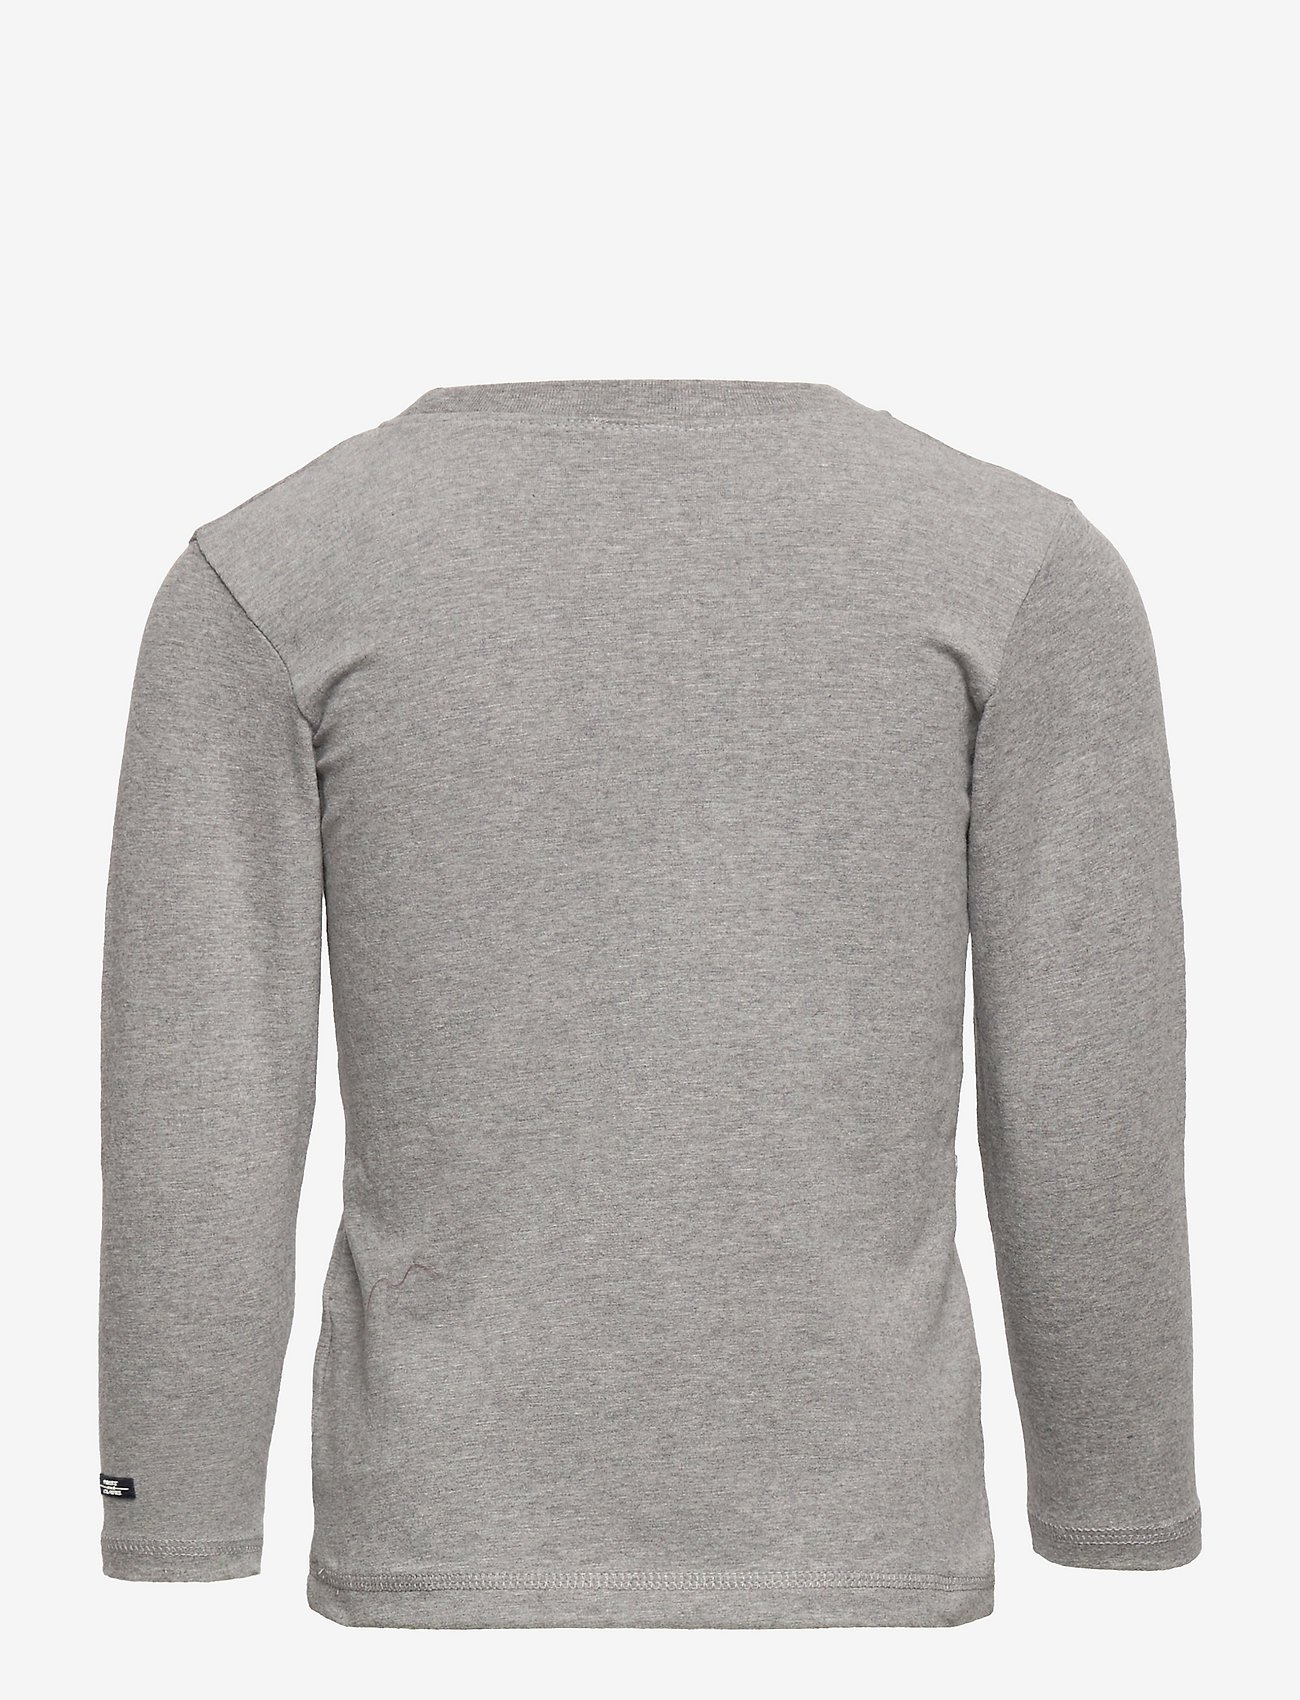 Hust & Claire - Alex - T-shirt - langærmede t-shirts - light grey melange - 1